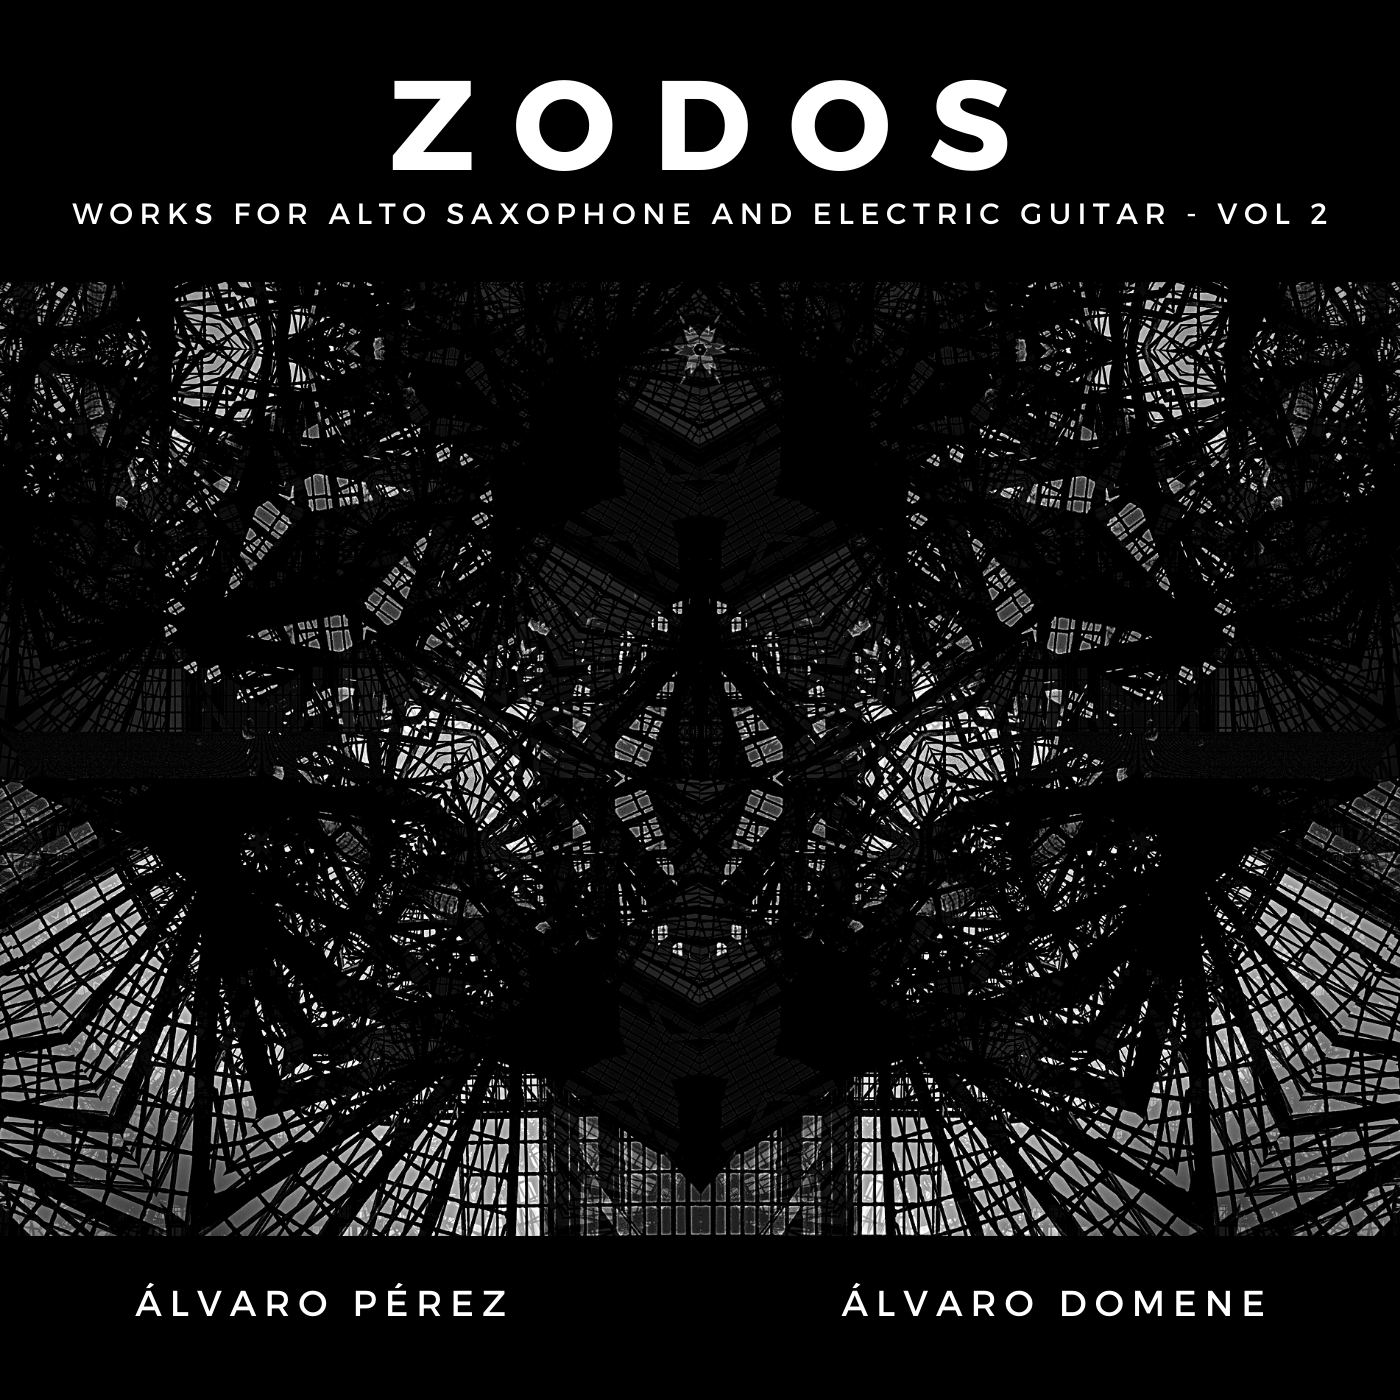  ZODOS: Works For Alto Saxophone and Electric Guitar (VOLUME 2) by Álvaro Pérez &amp; Álvaro Domene